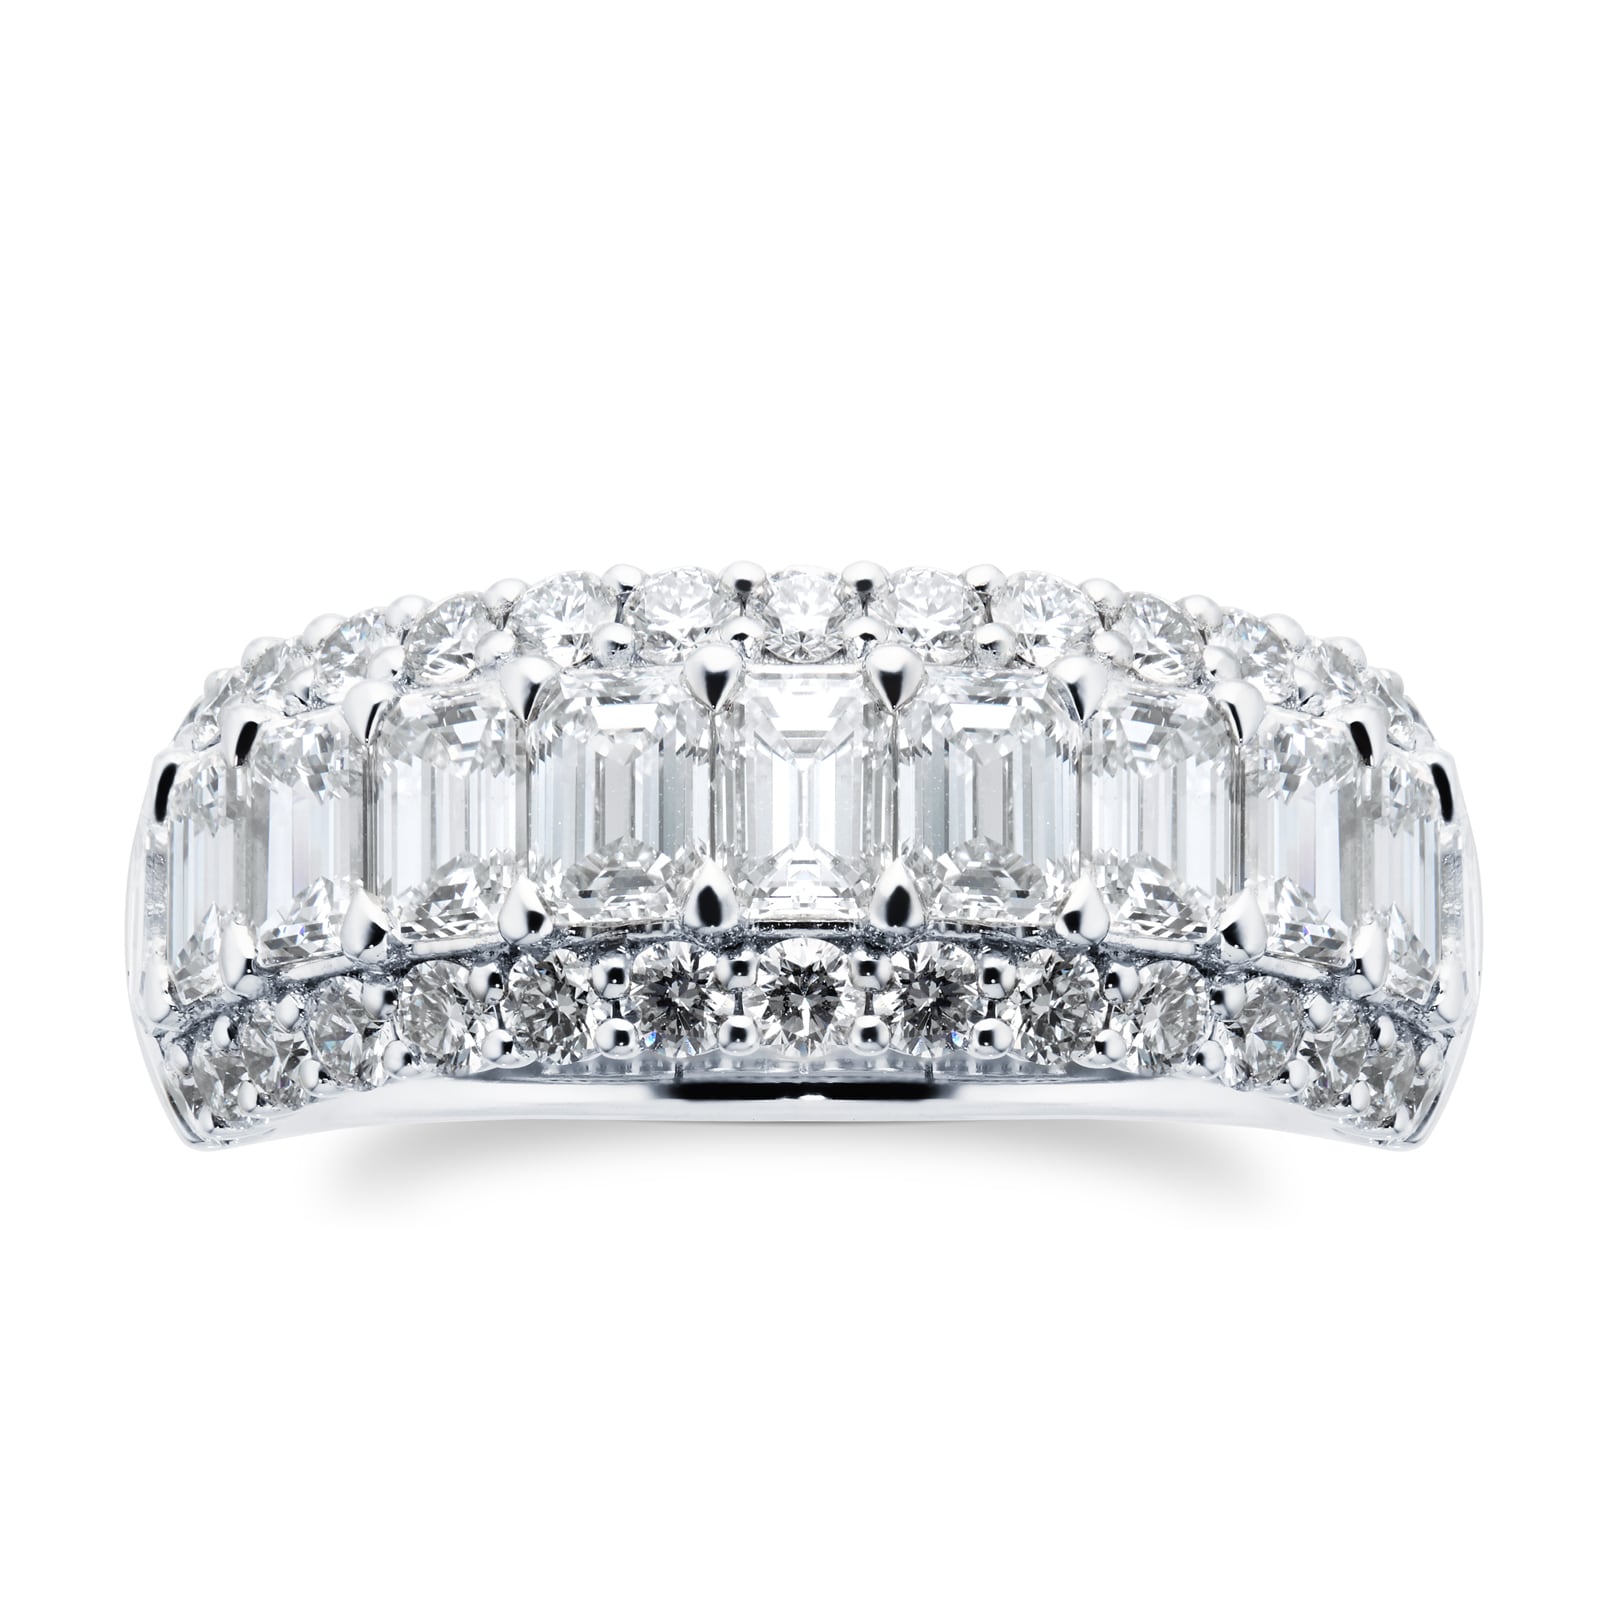 18ct White Gold 3.58cttw Emerald Cut Multi Row Diamond Ring - Ring Size Q